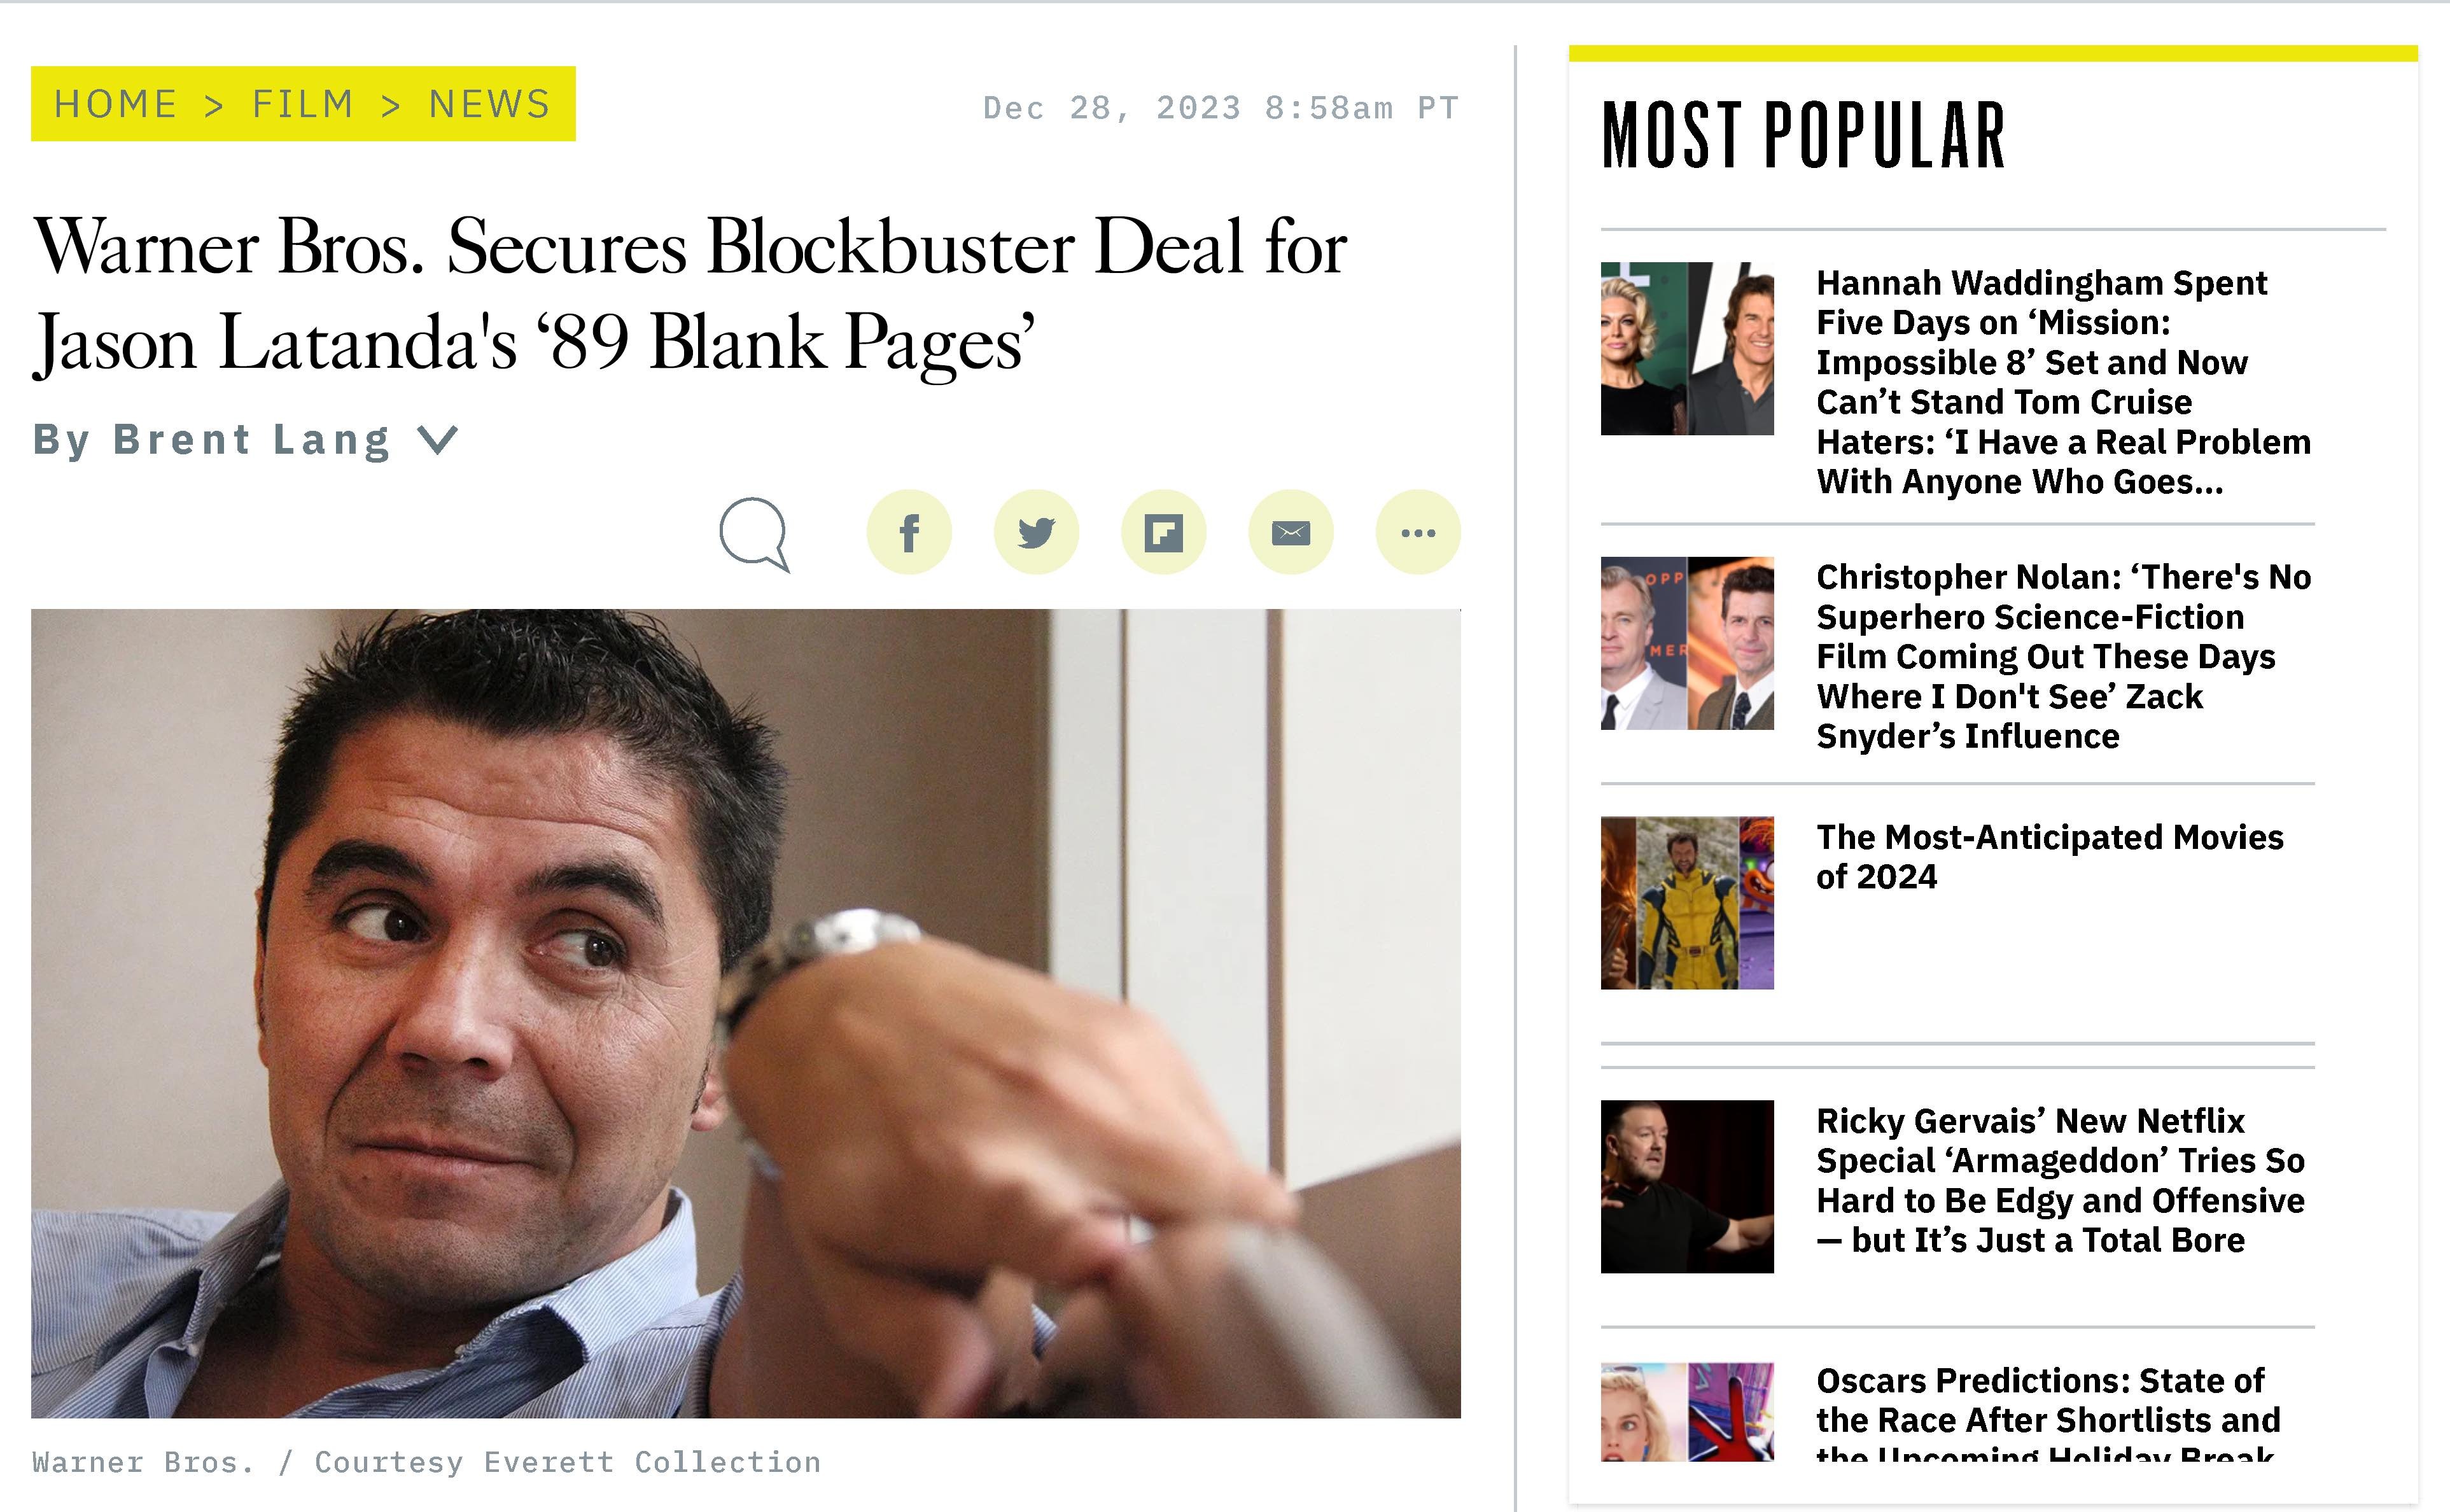 Warner Bros. Secures Blockbuster Deal for Jason Latanda's ‘89 Blank Pages